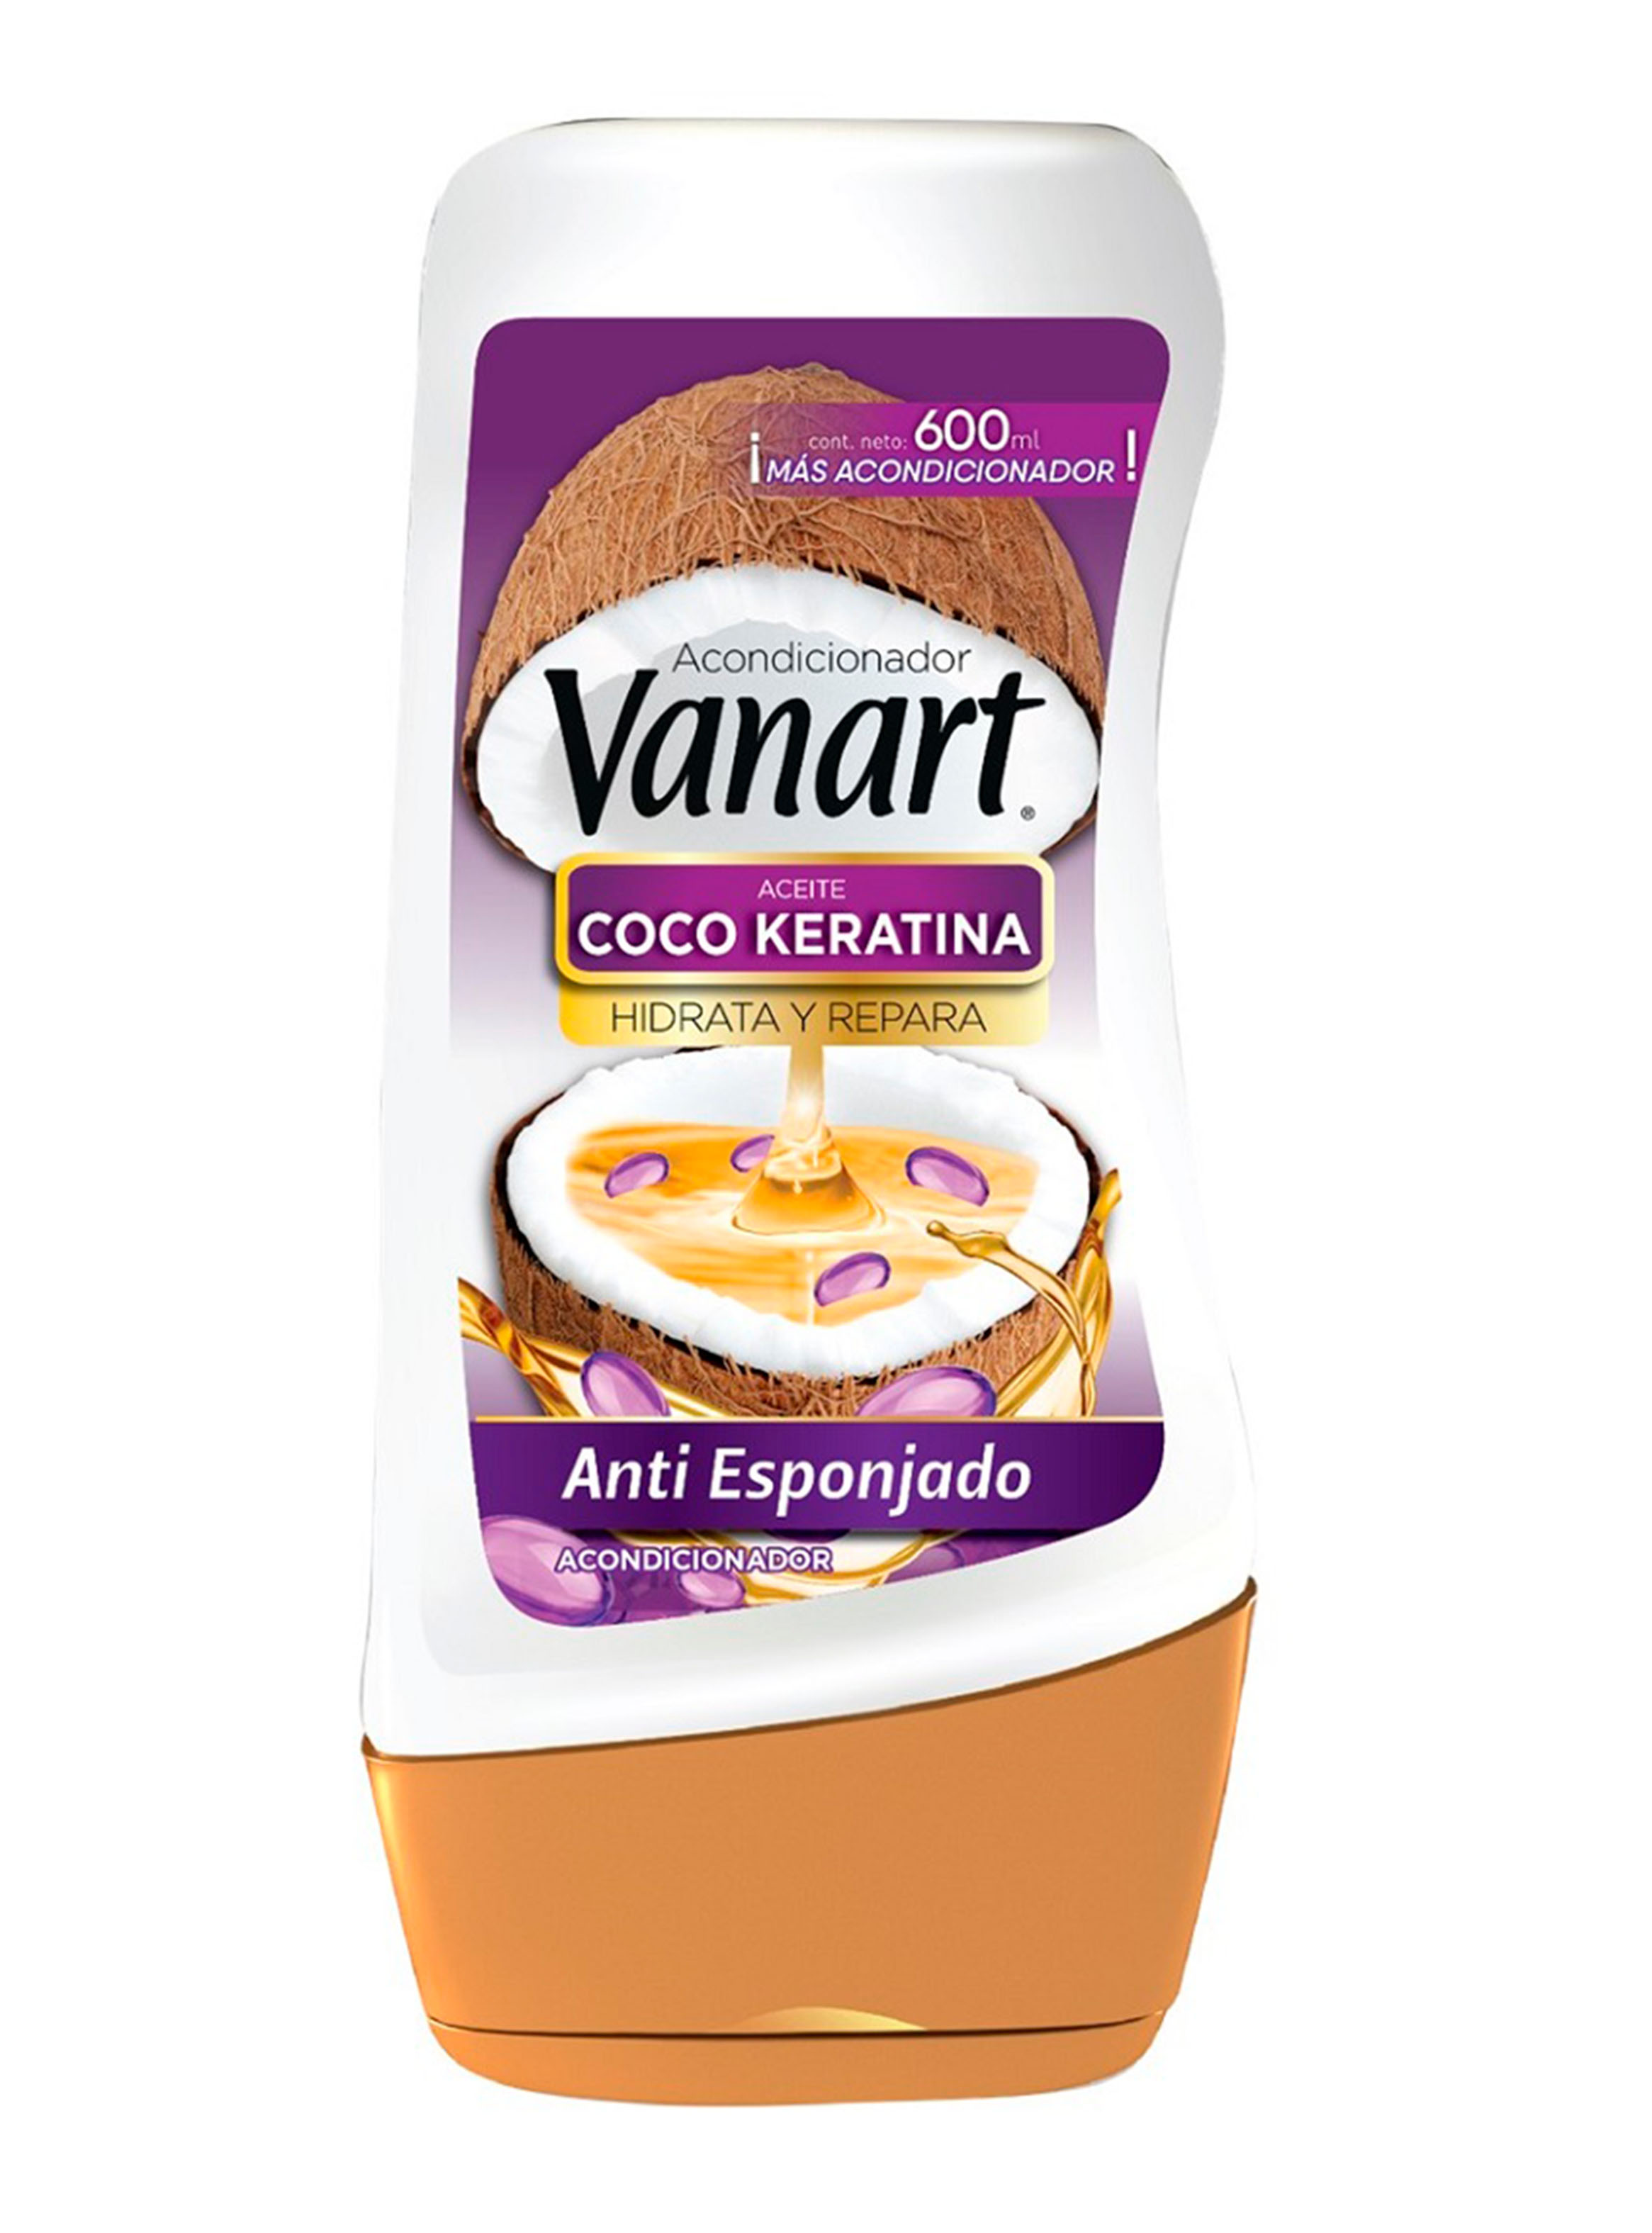 Acondicionador Vanart Anti Esponjado 600 ml